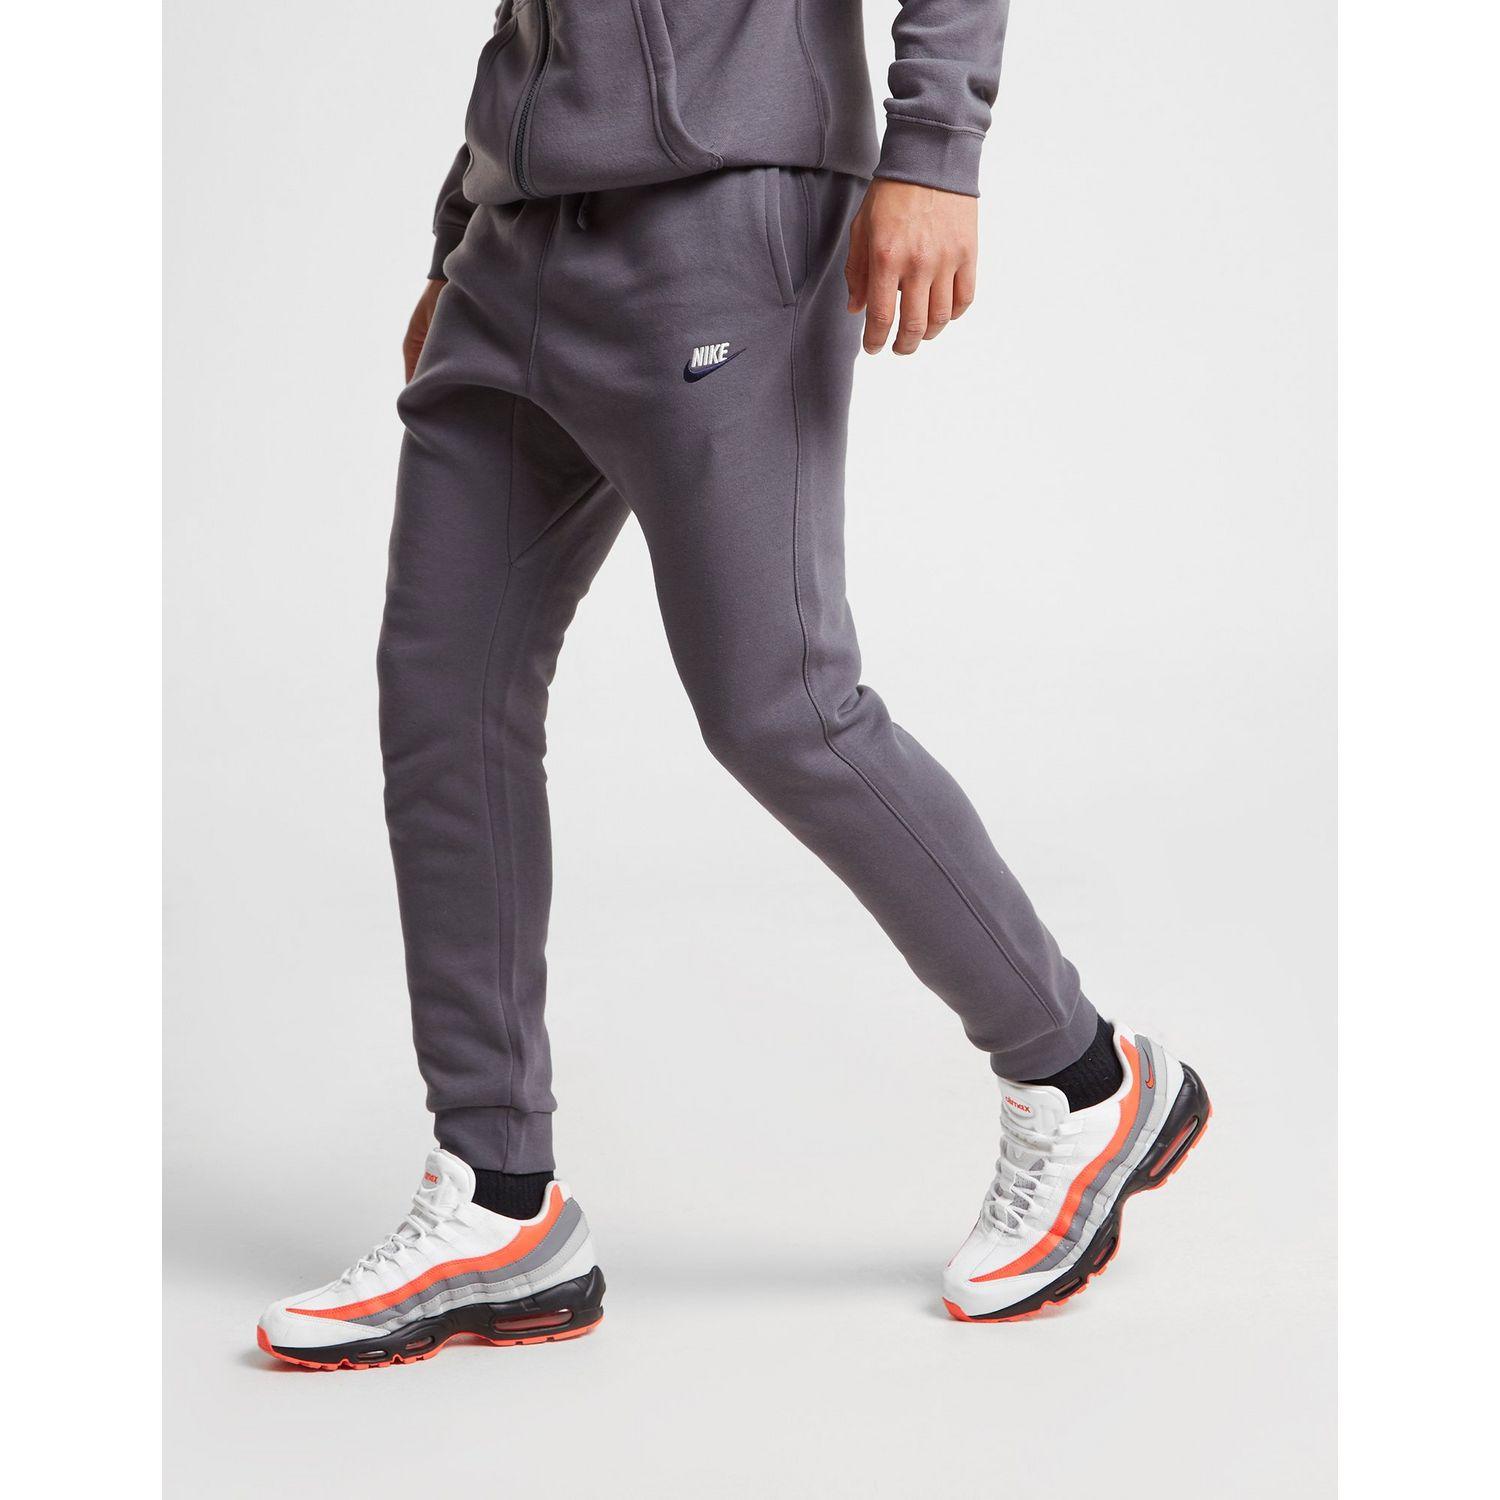 Nike Foundation Cuffed Fleece Joggers in Grey/White/Black (Grey) for Men -  Lyst